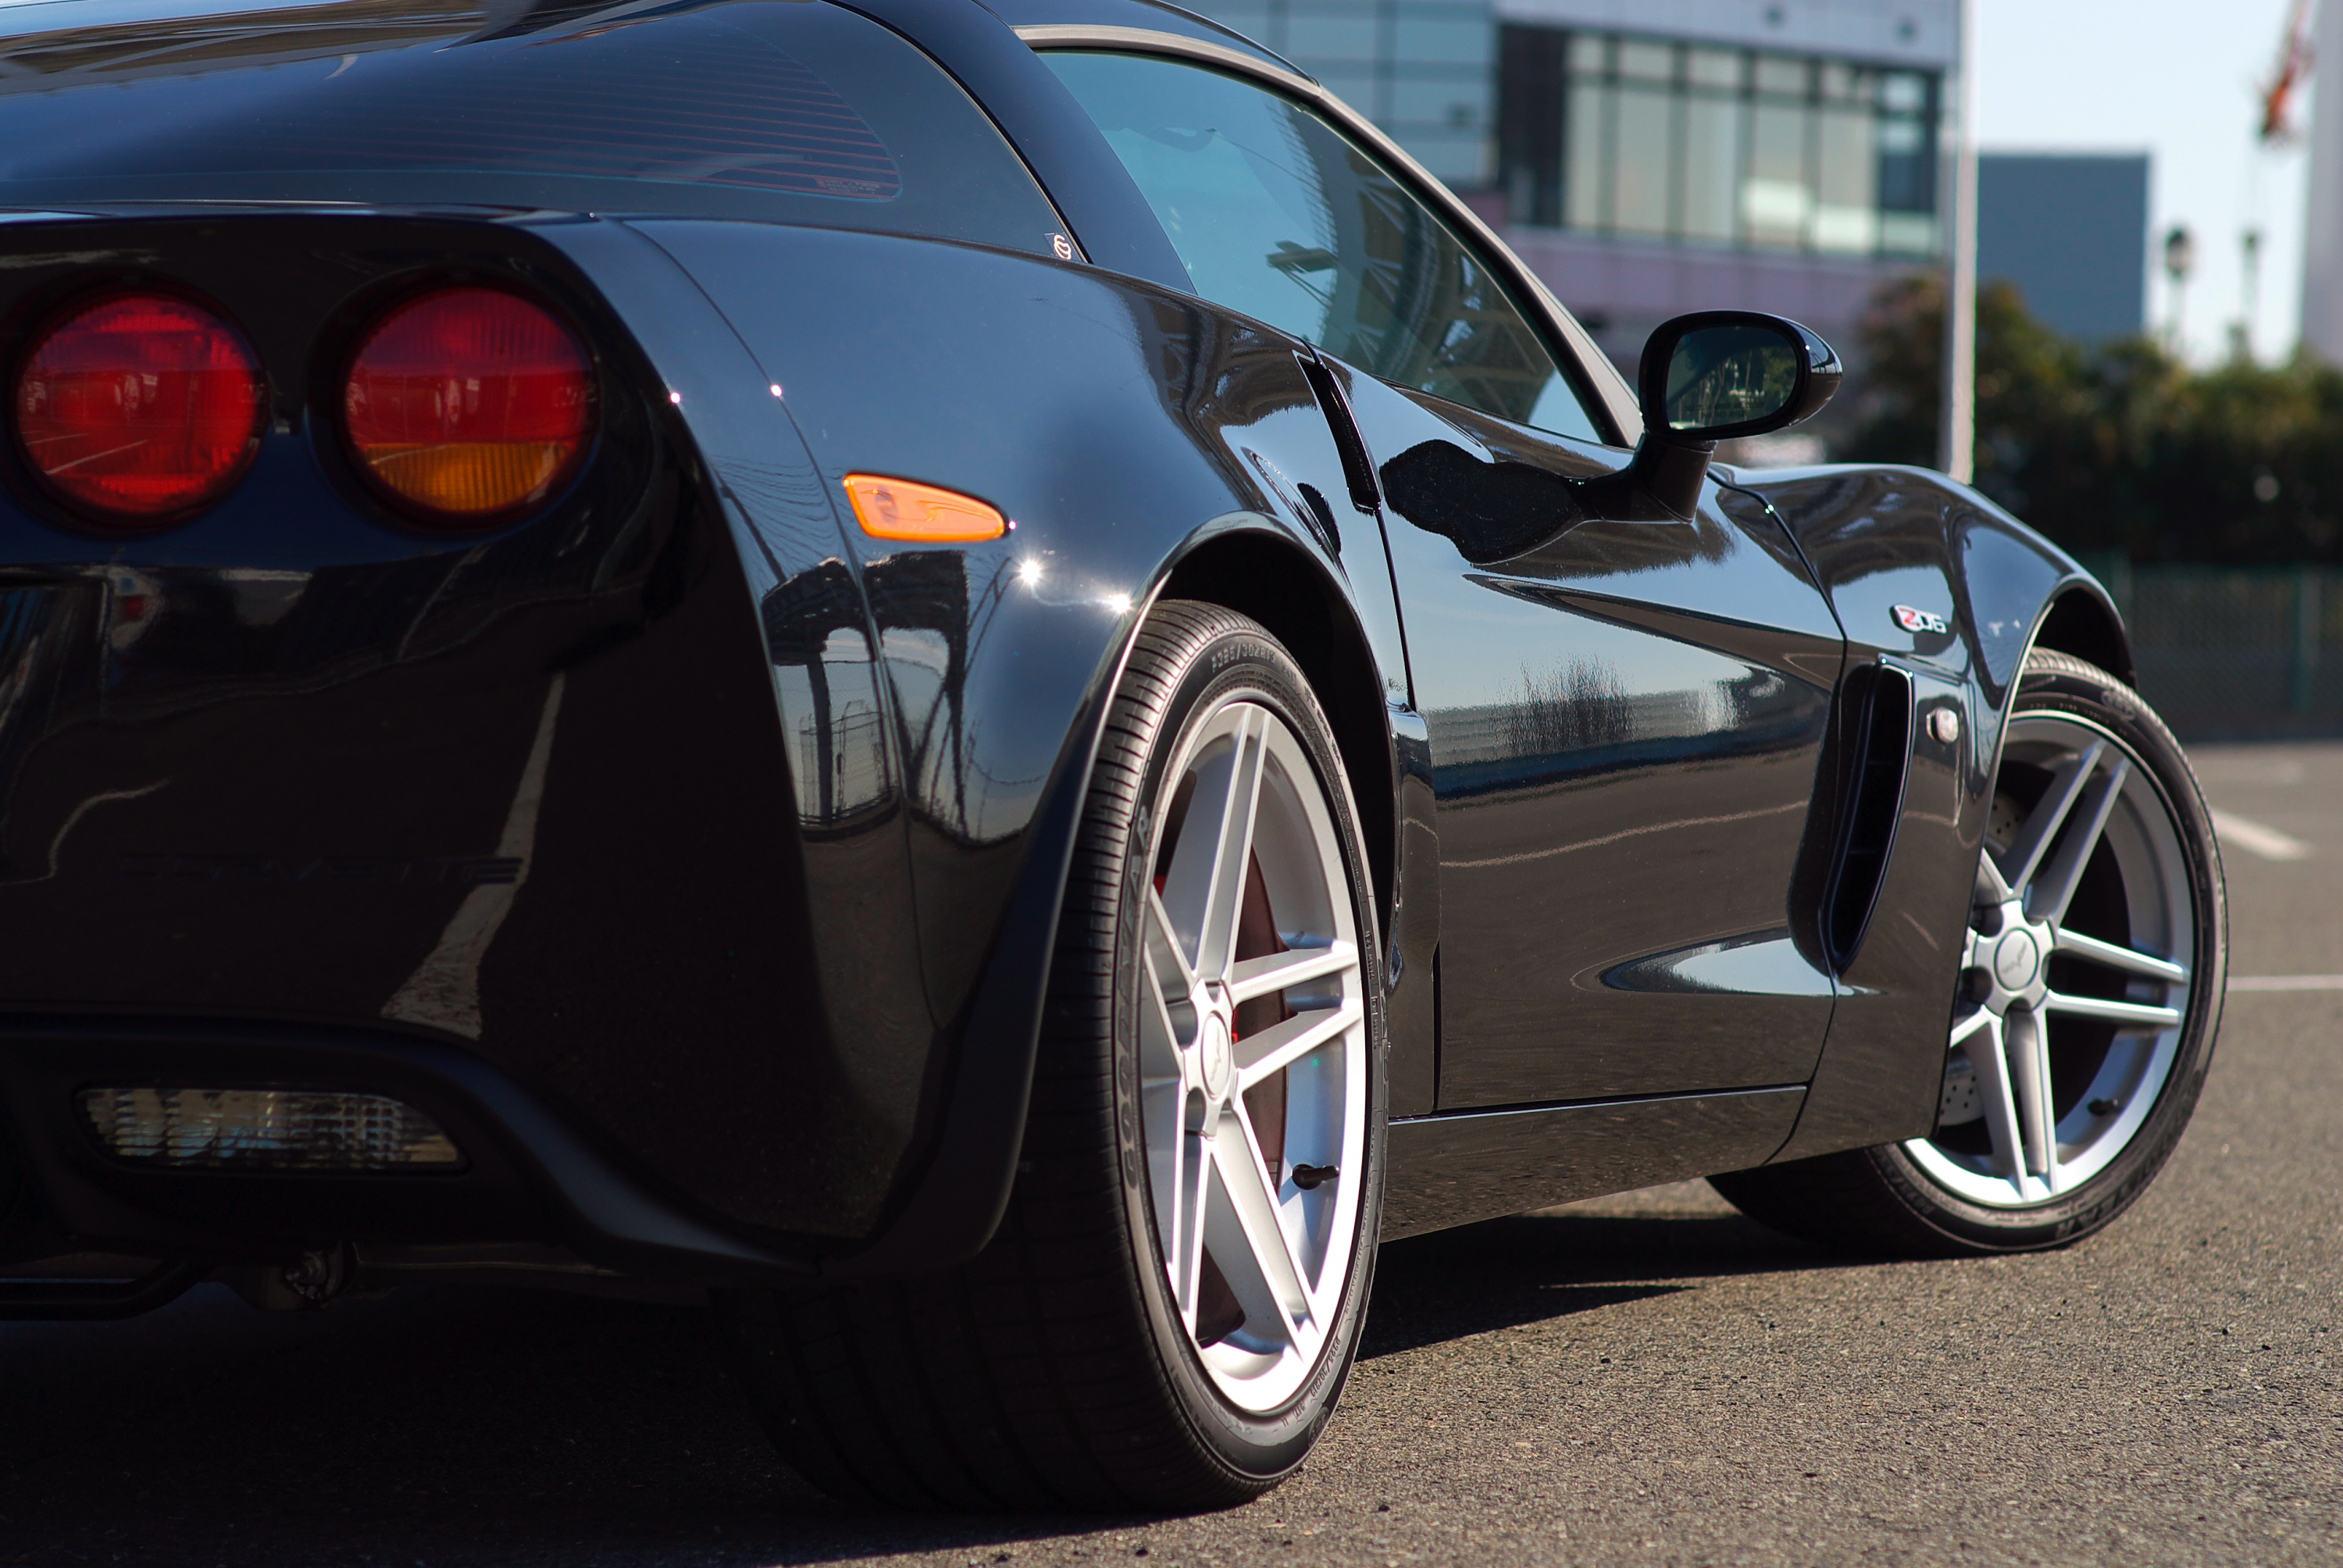 cars, vehicles, Corvette, rear angle view - desktop wallpaper